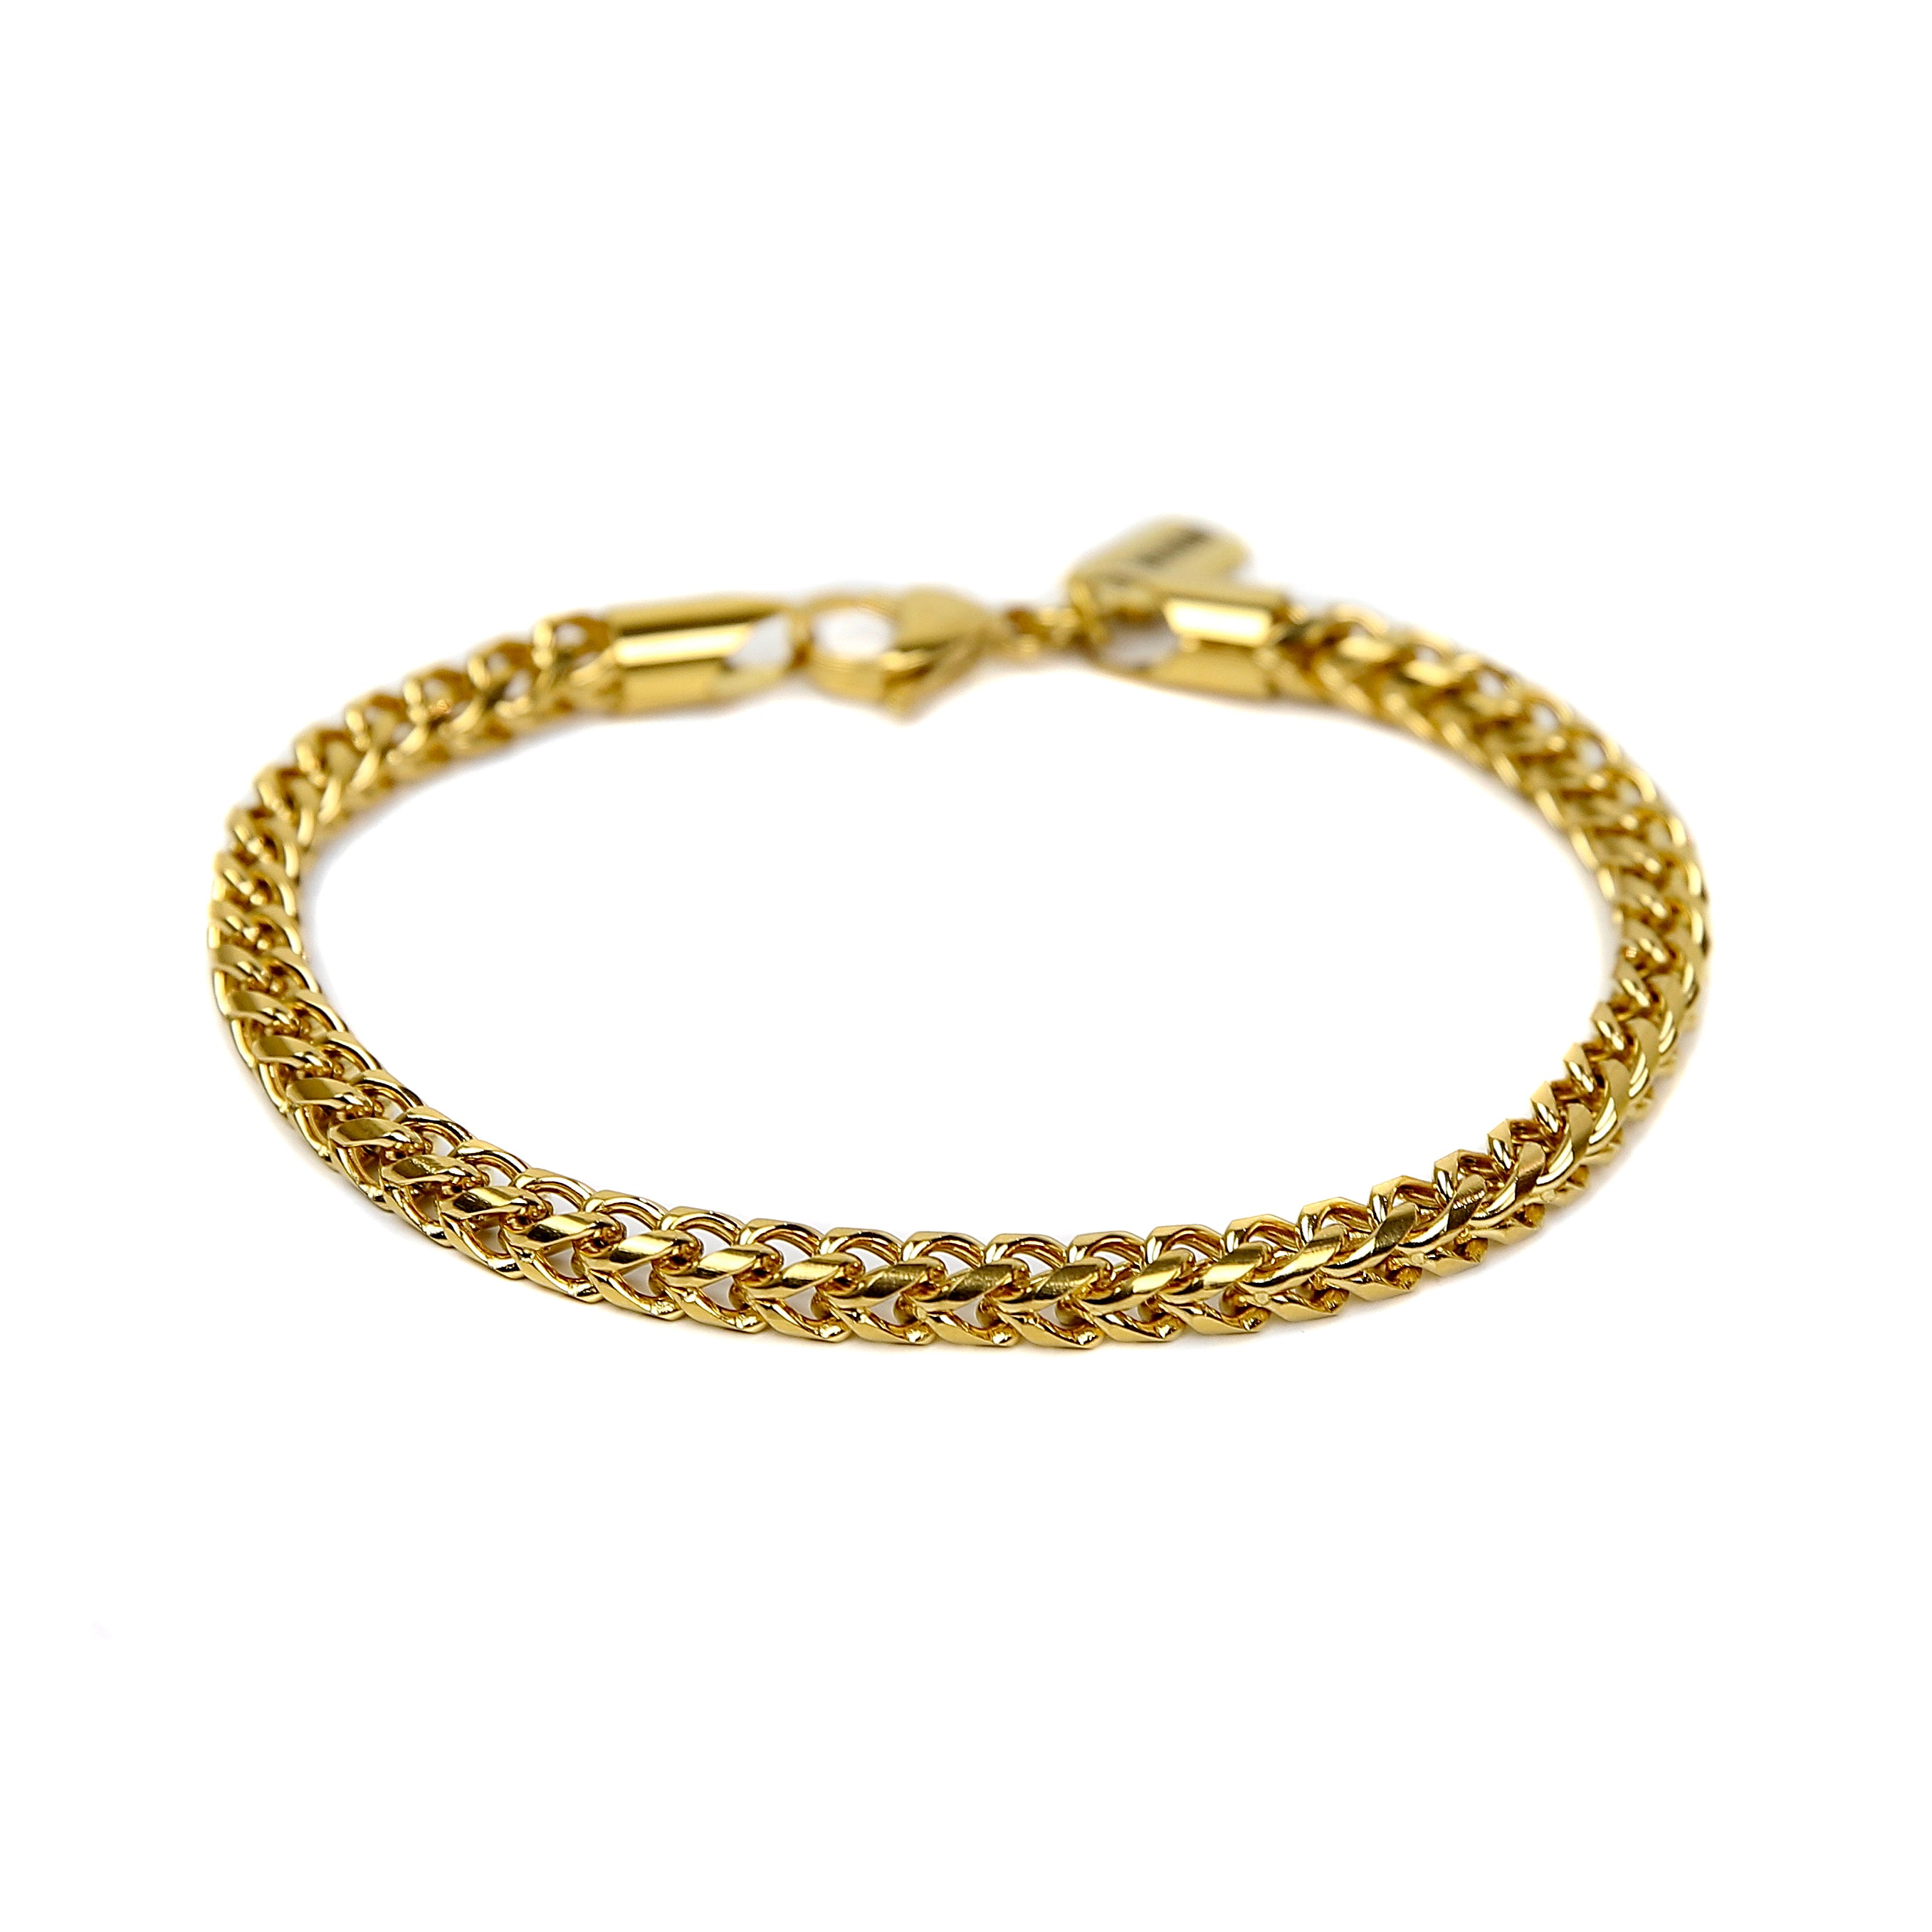 Franco Chain Bracelet - Gold 5mm